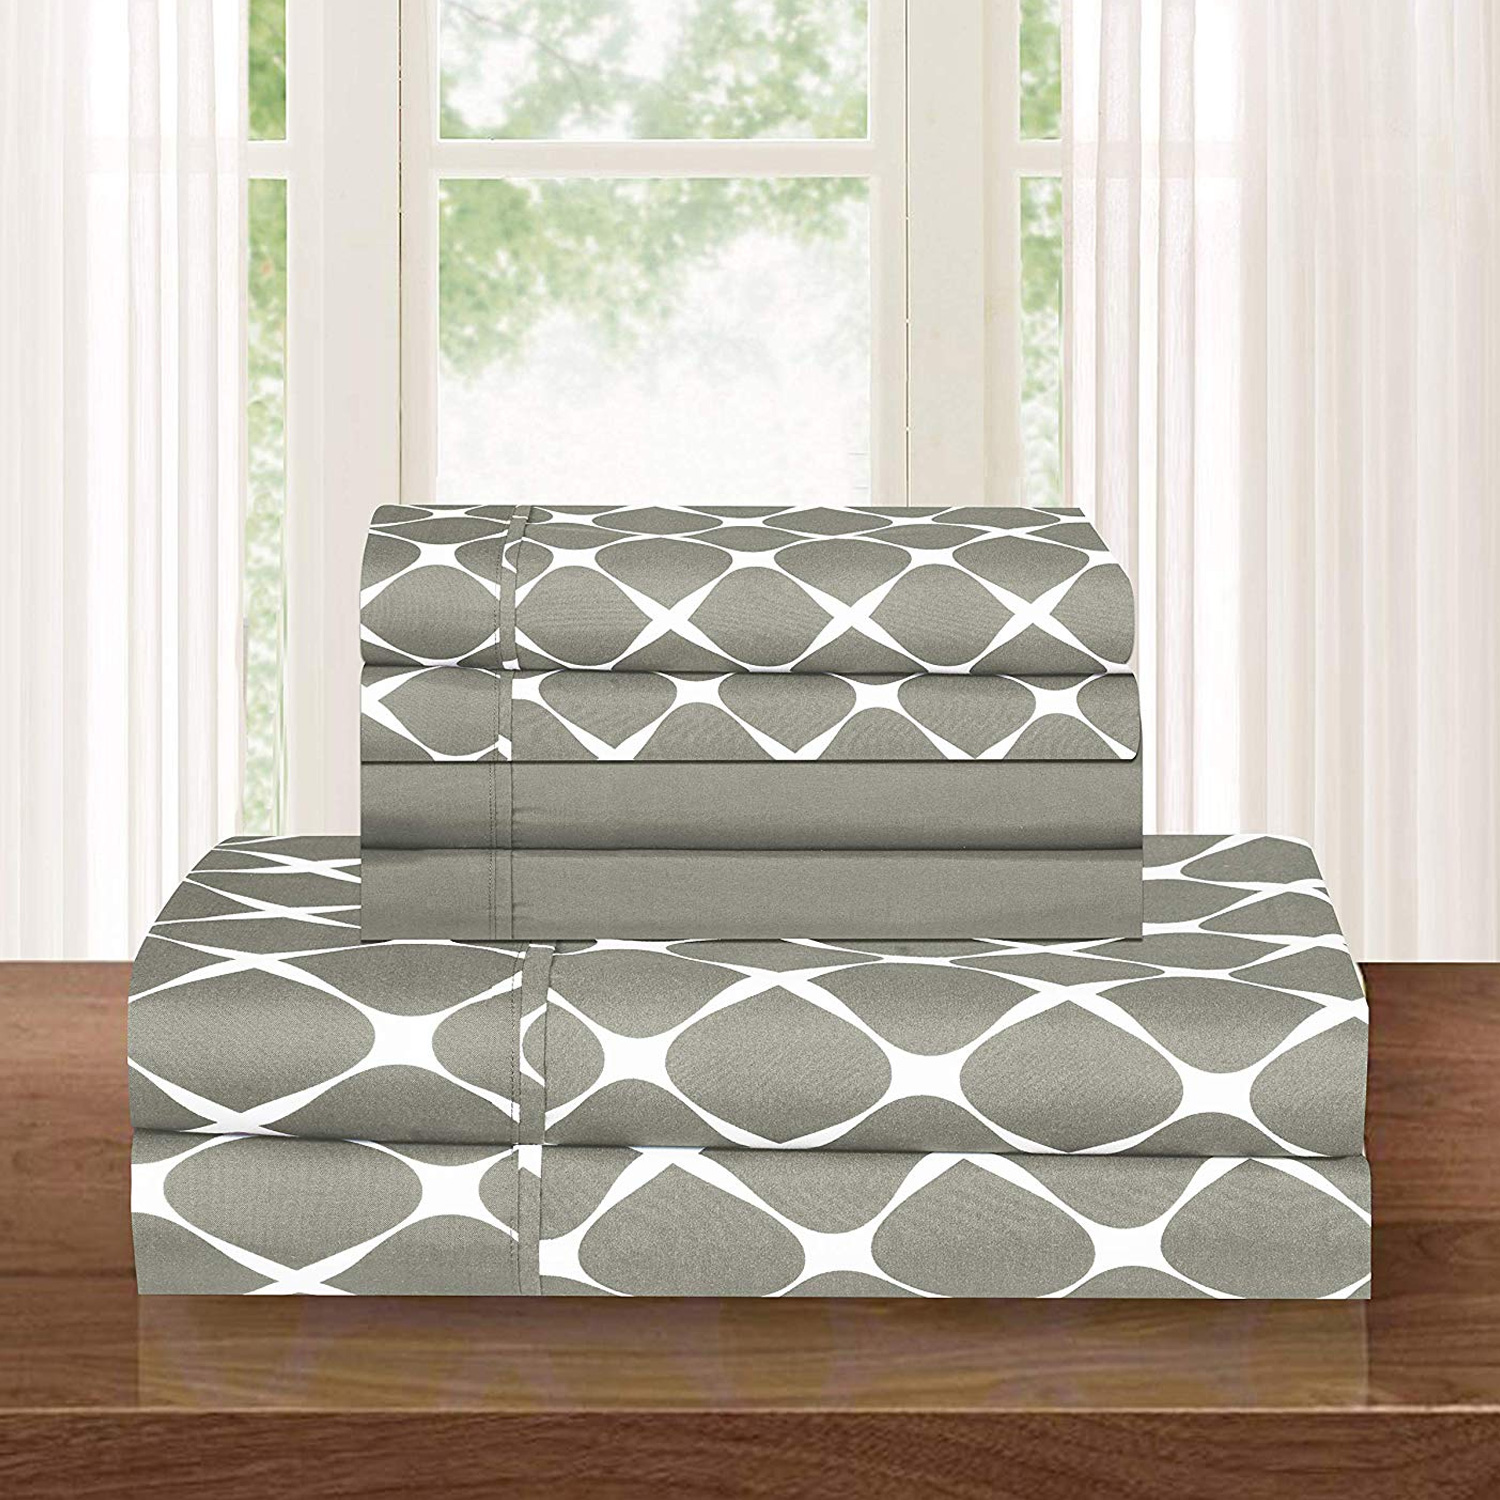 6 Piece Sheet Wrinkle Resistant Milano Trellis Pattern Bedding Set